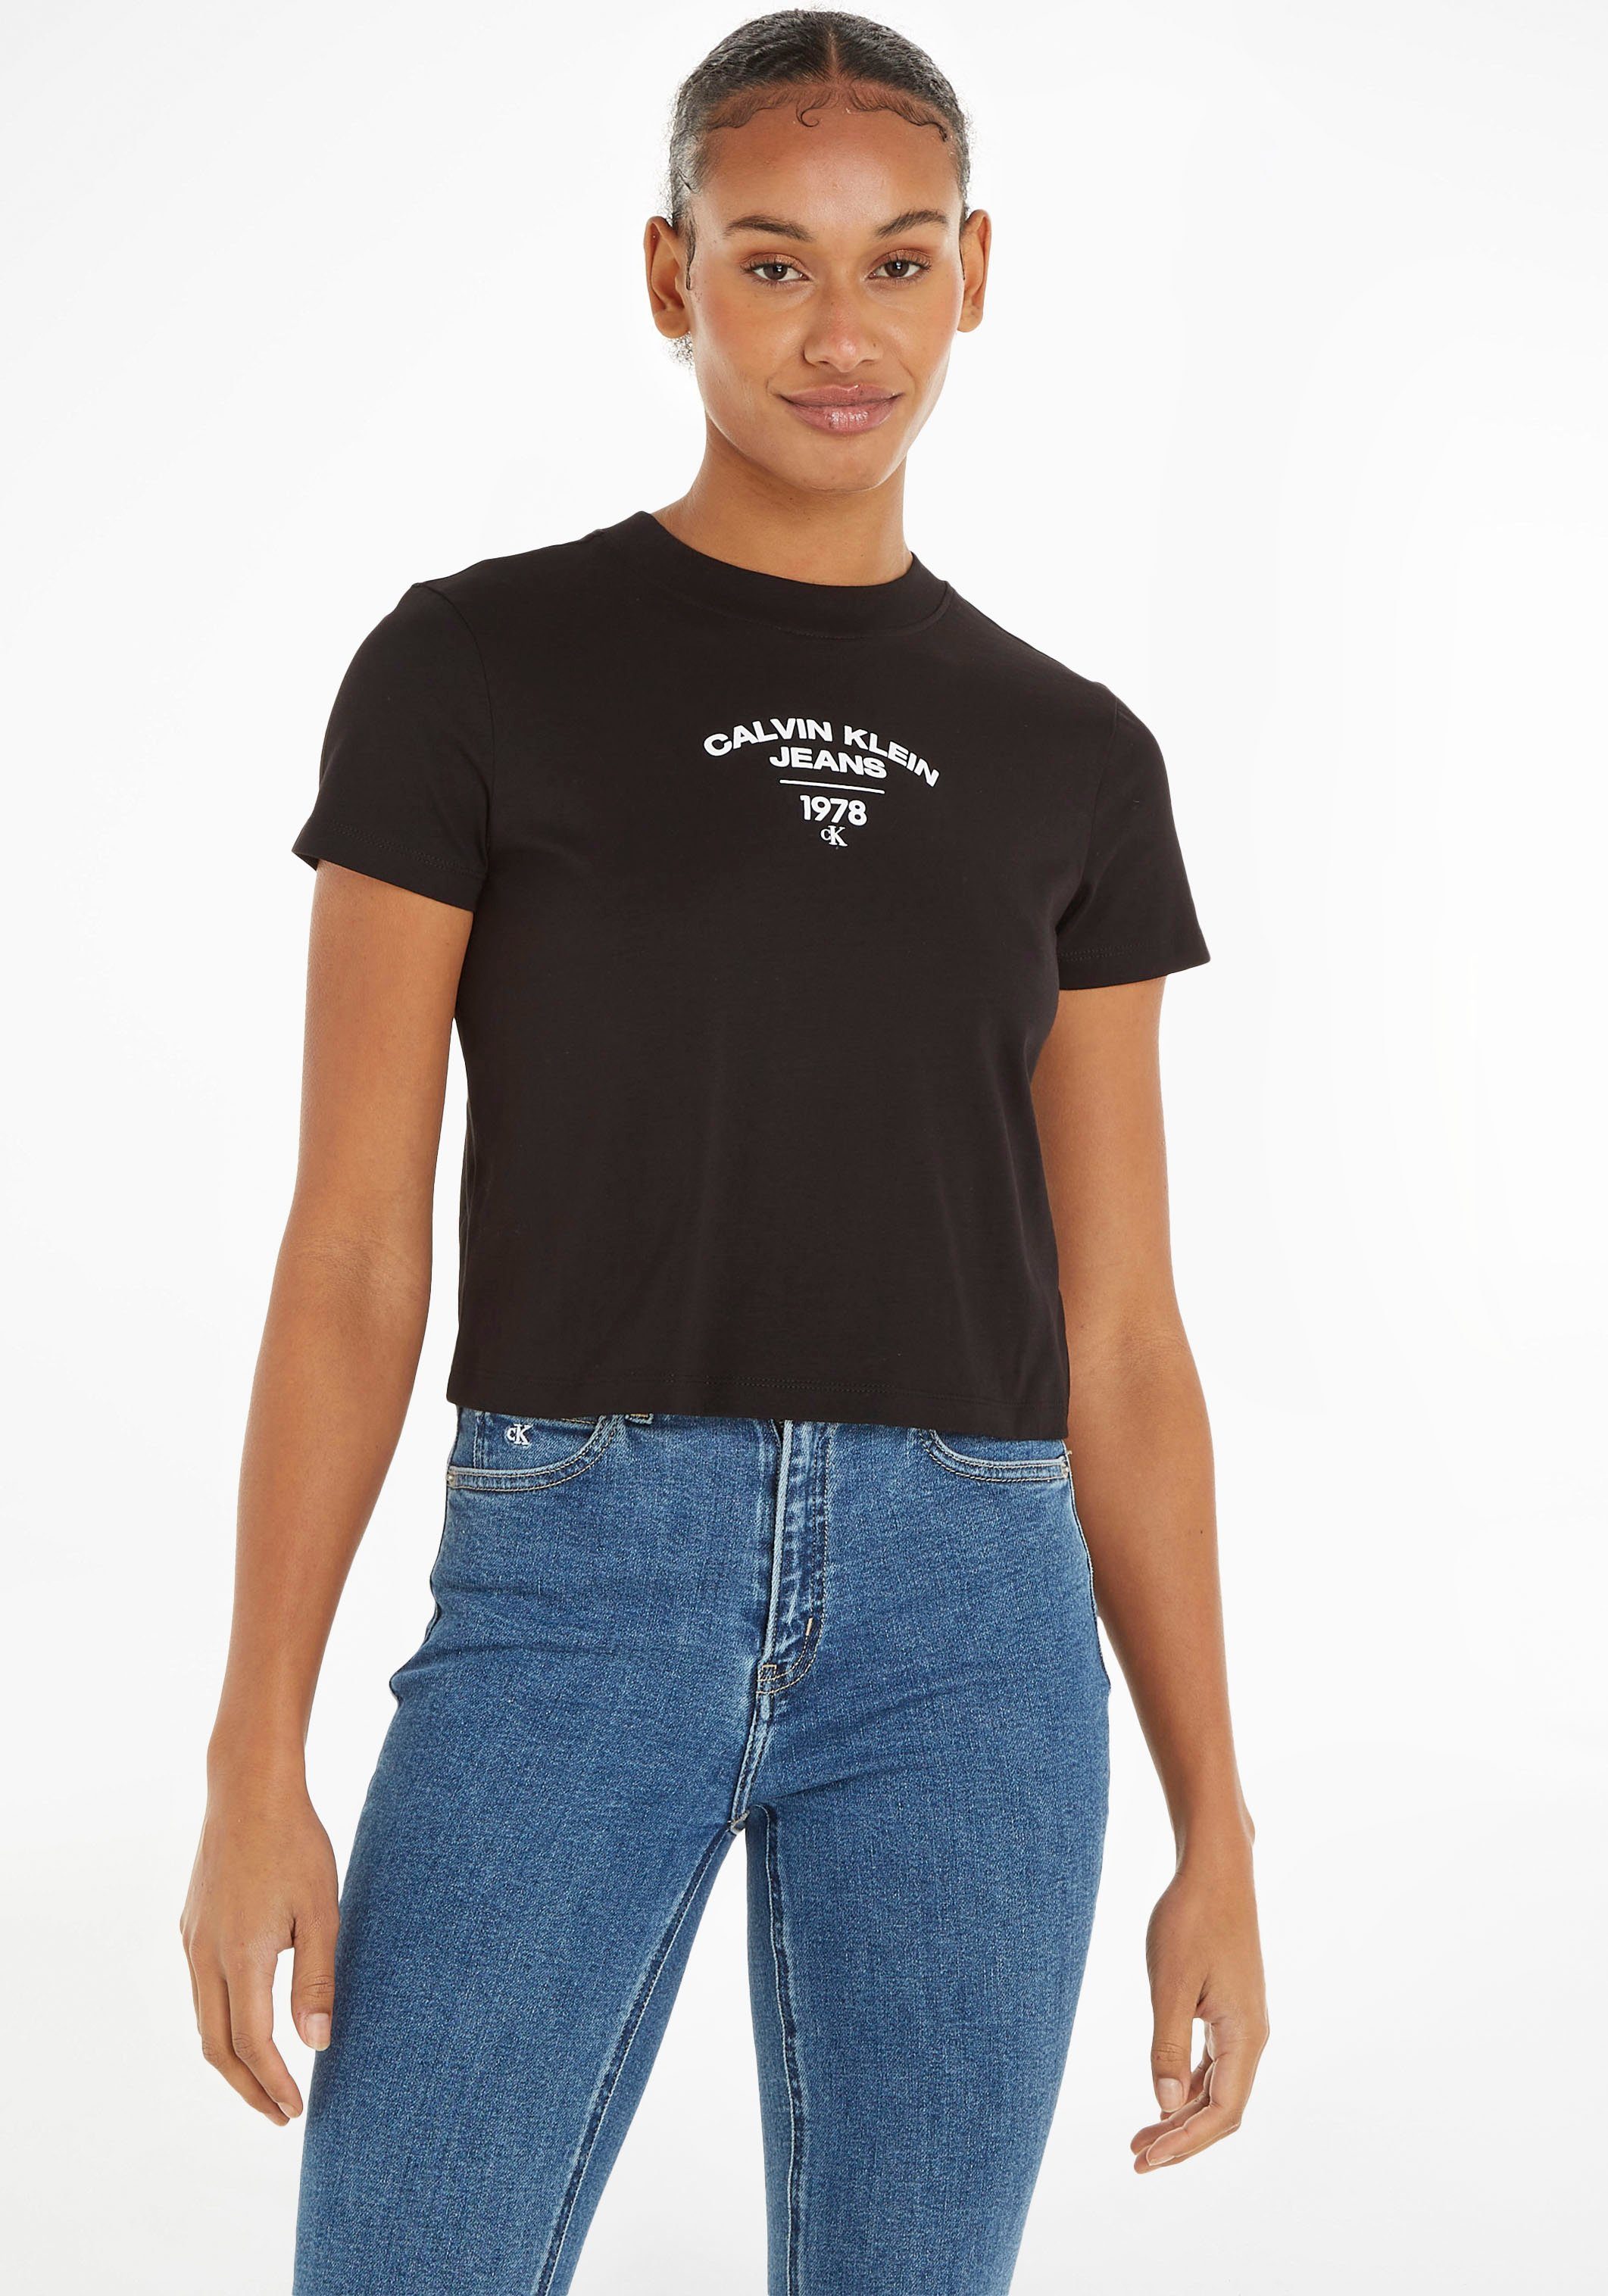 Calvin Klein TEE BABY VARSITY Ck T-Shirt LOGO Black Jeans